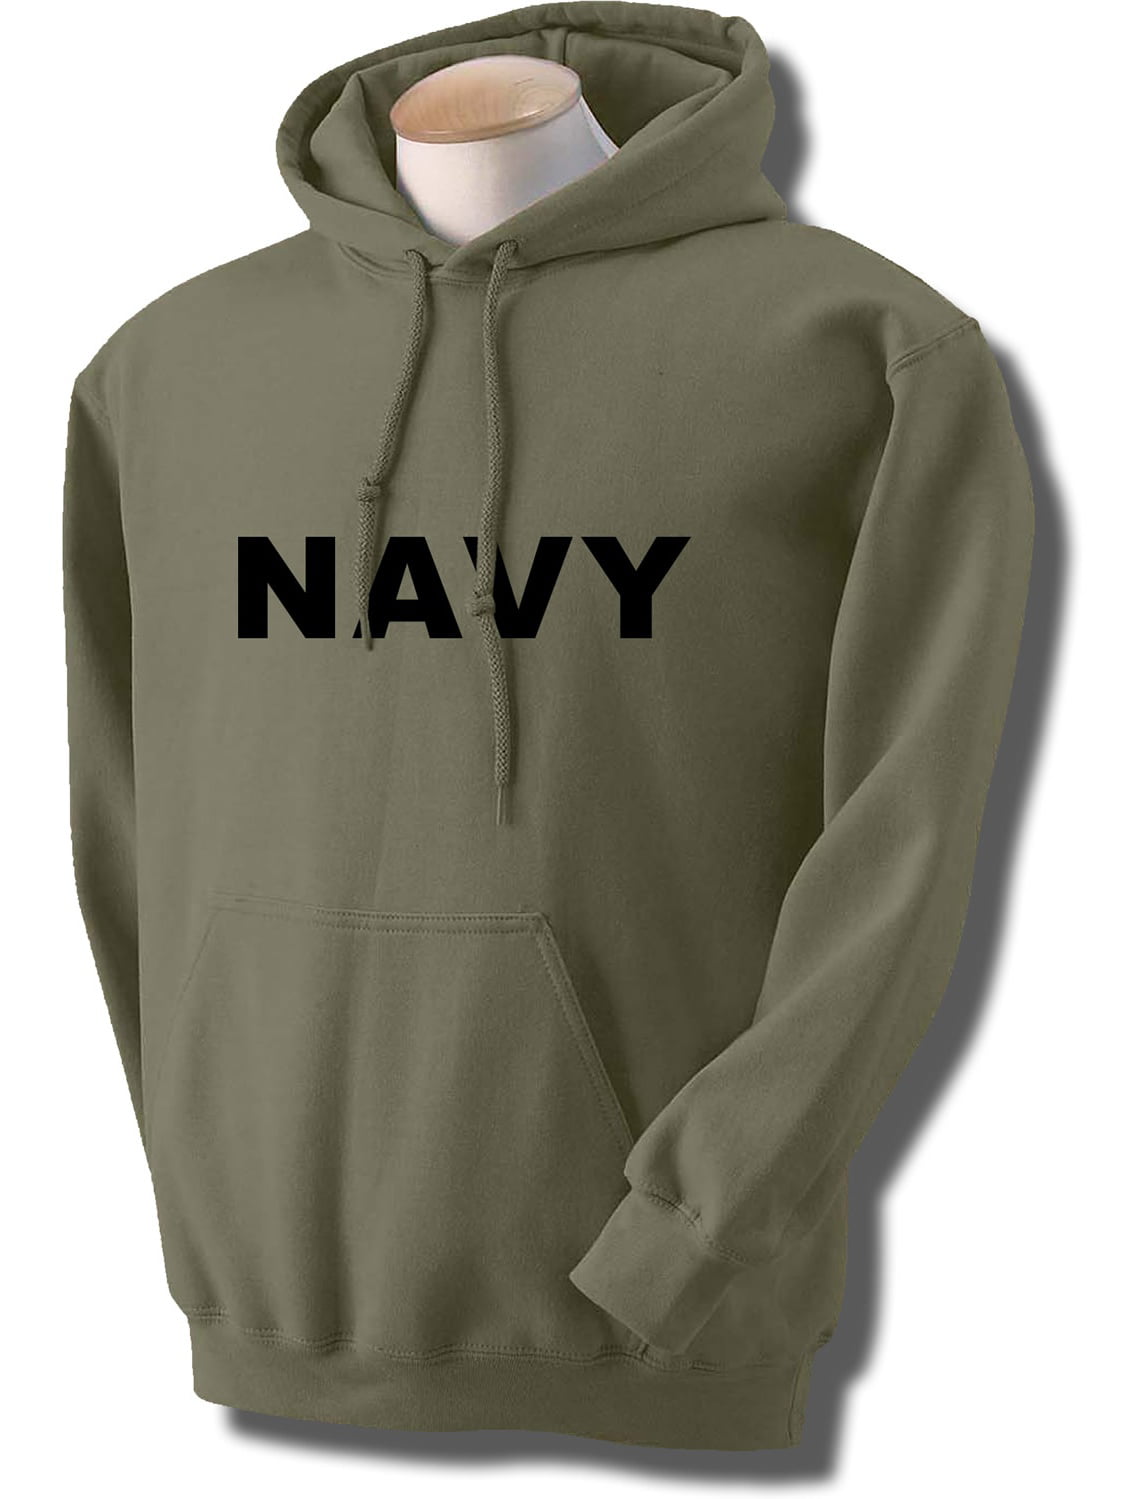 NAVY Hooded Sweatshirt in Military Green - Walmart.com